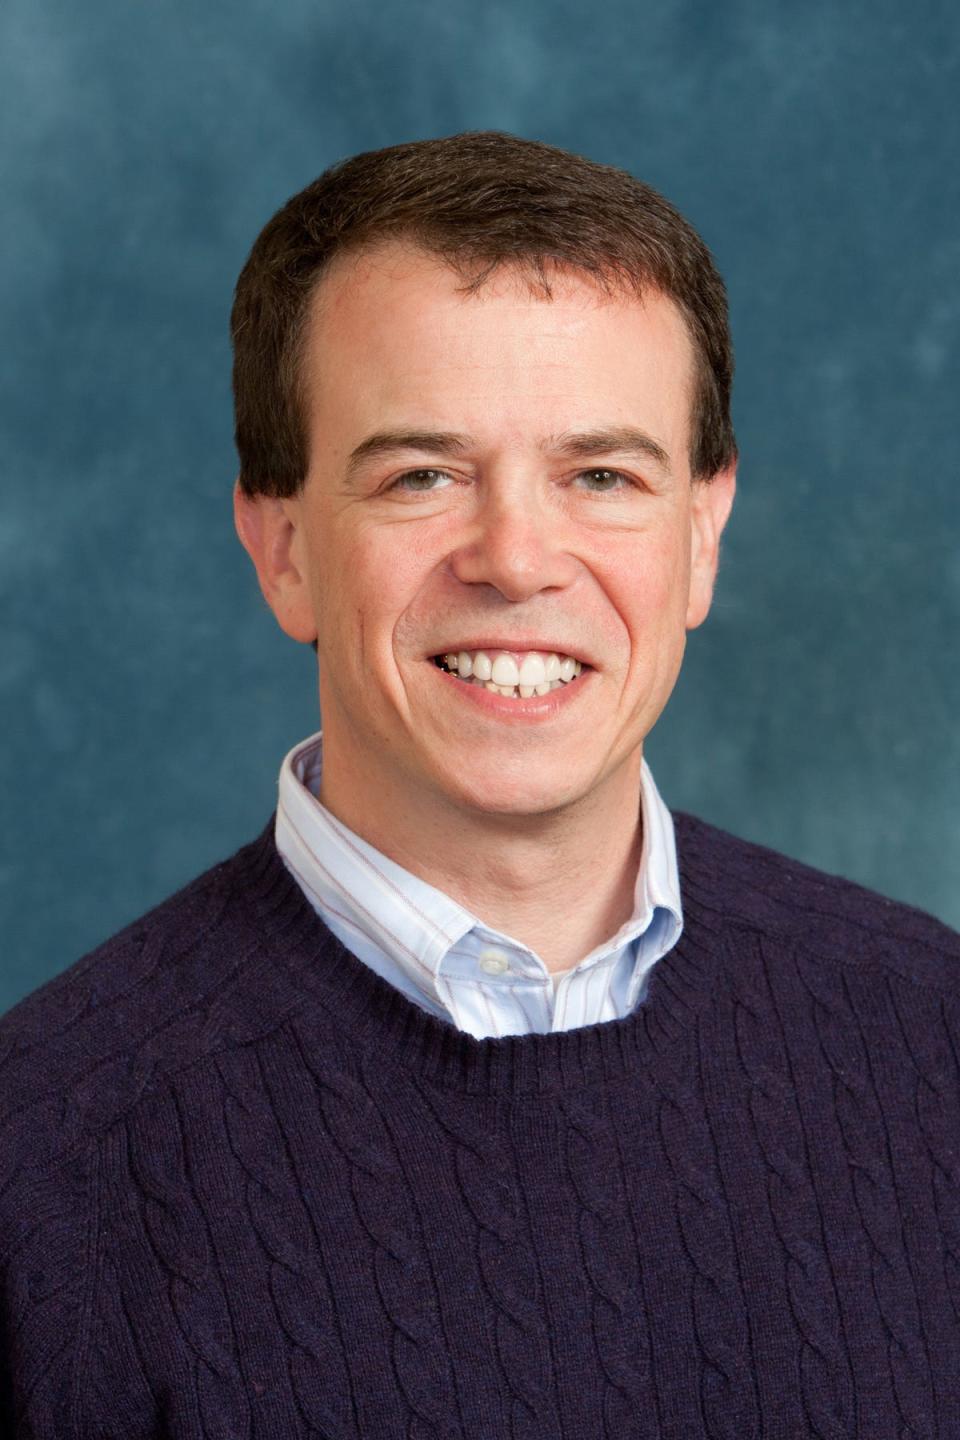 Dr. Gary Freed, a pediatrician at C.S. Mott Children's Hospital in Ann Arbor.